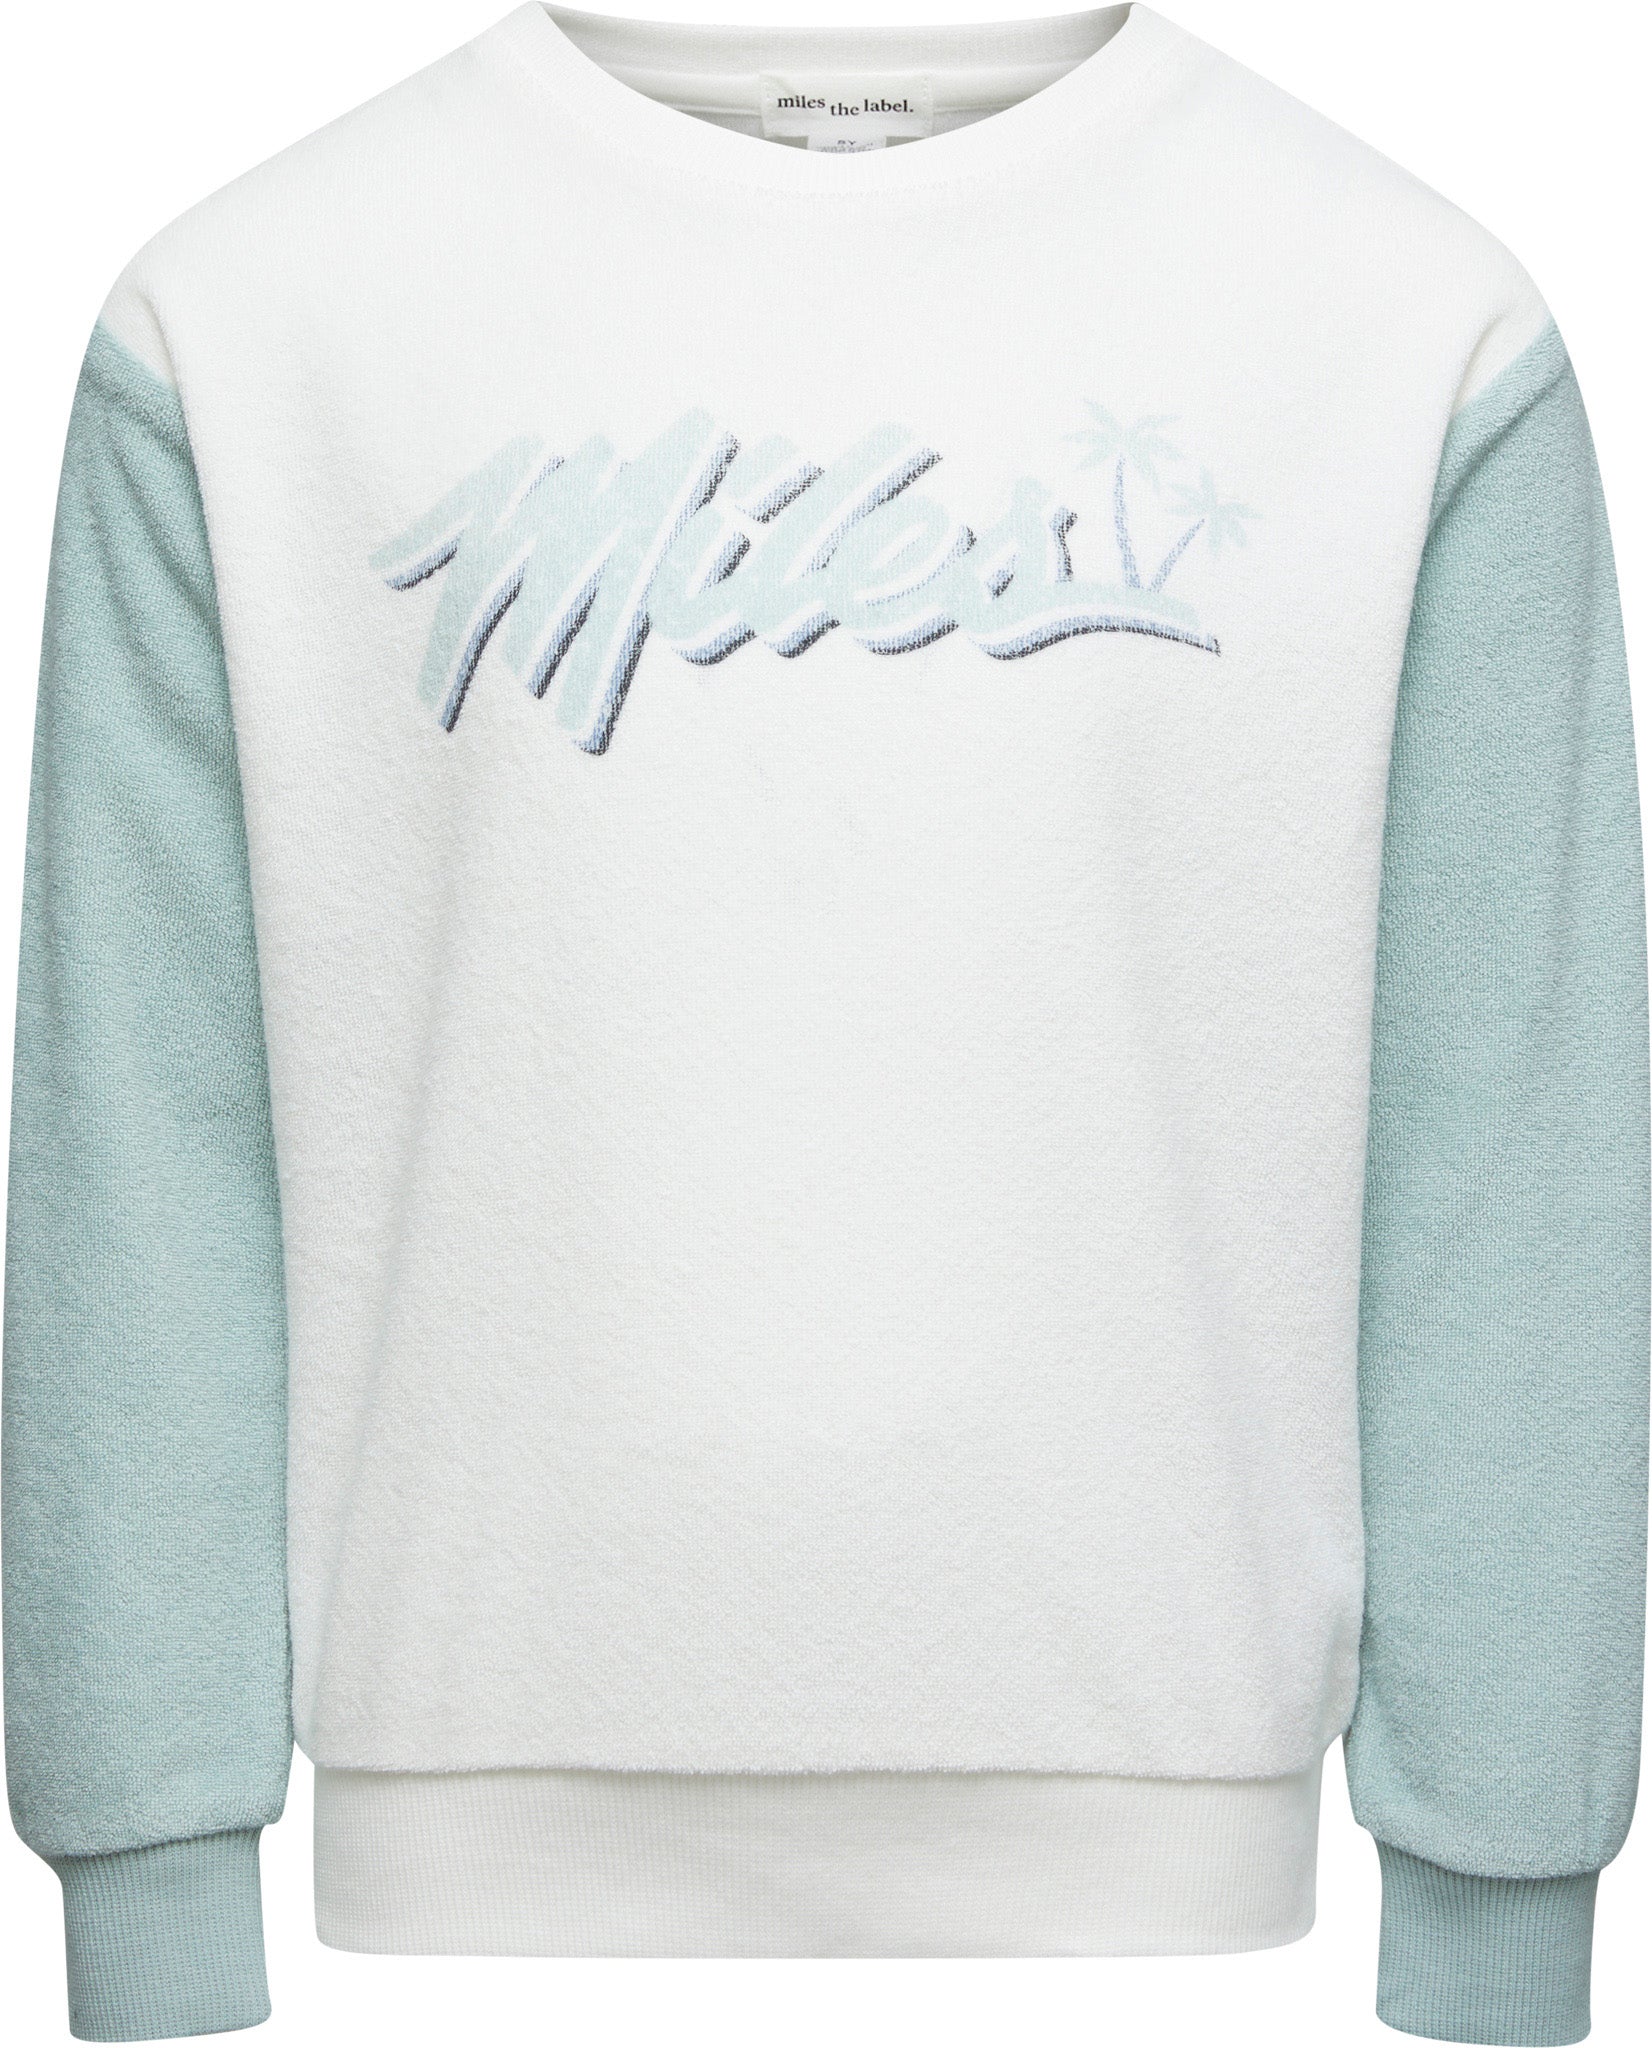 Miles The Label Terry Cloth Sweatshirt - Boys | Altitude Sports